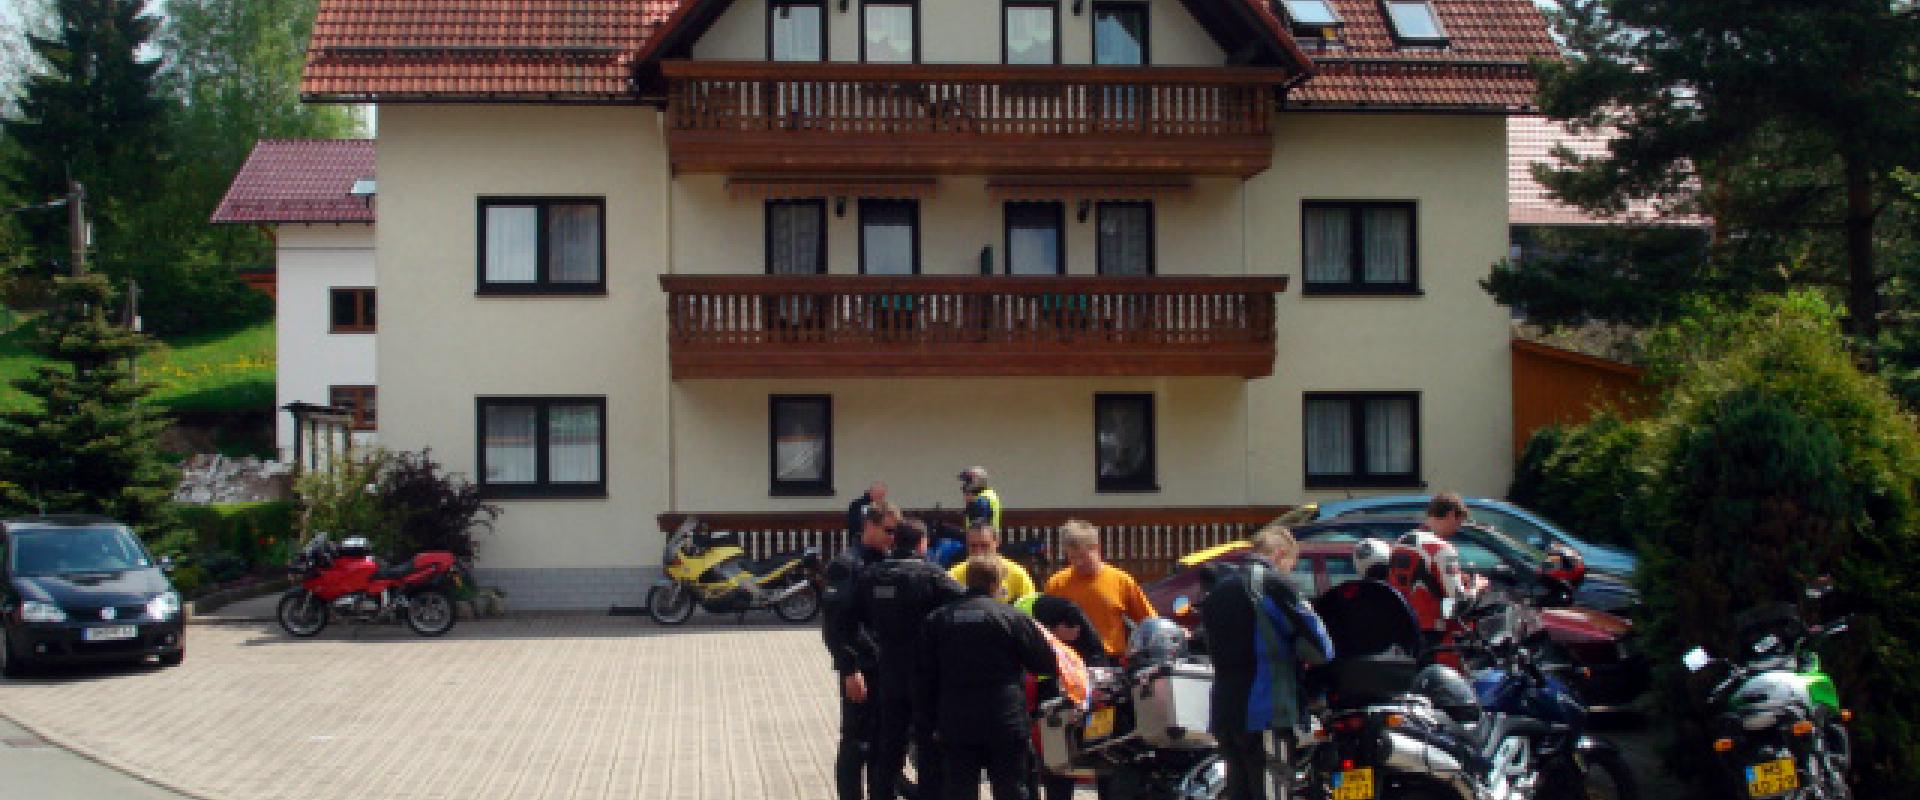 11482 Motorrad Hotel Zum Pfefferstübchen in Thüringen.jpg